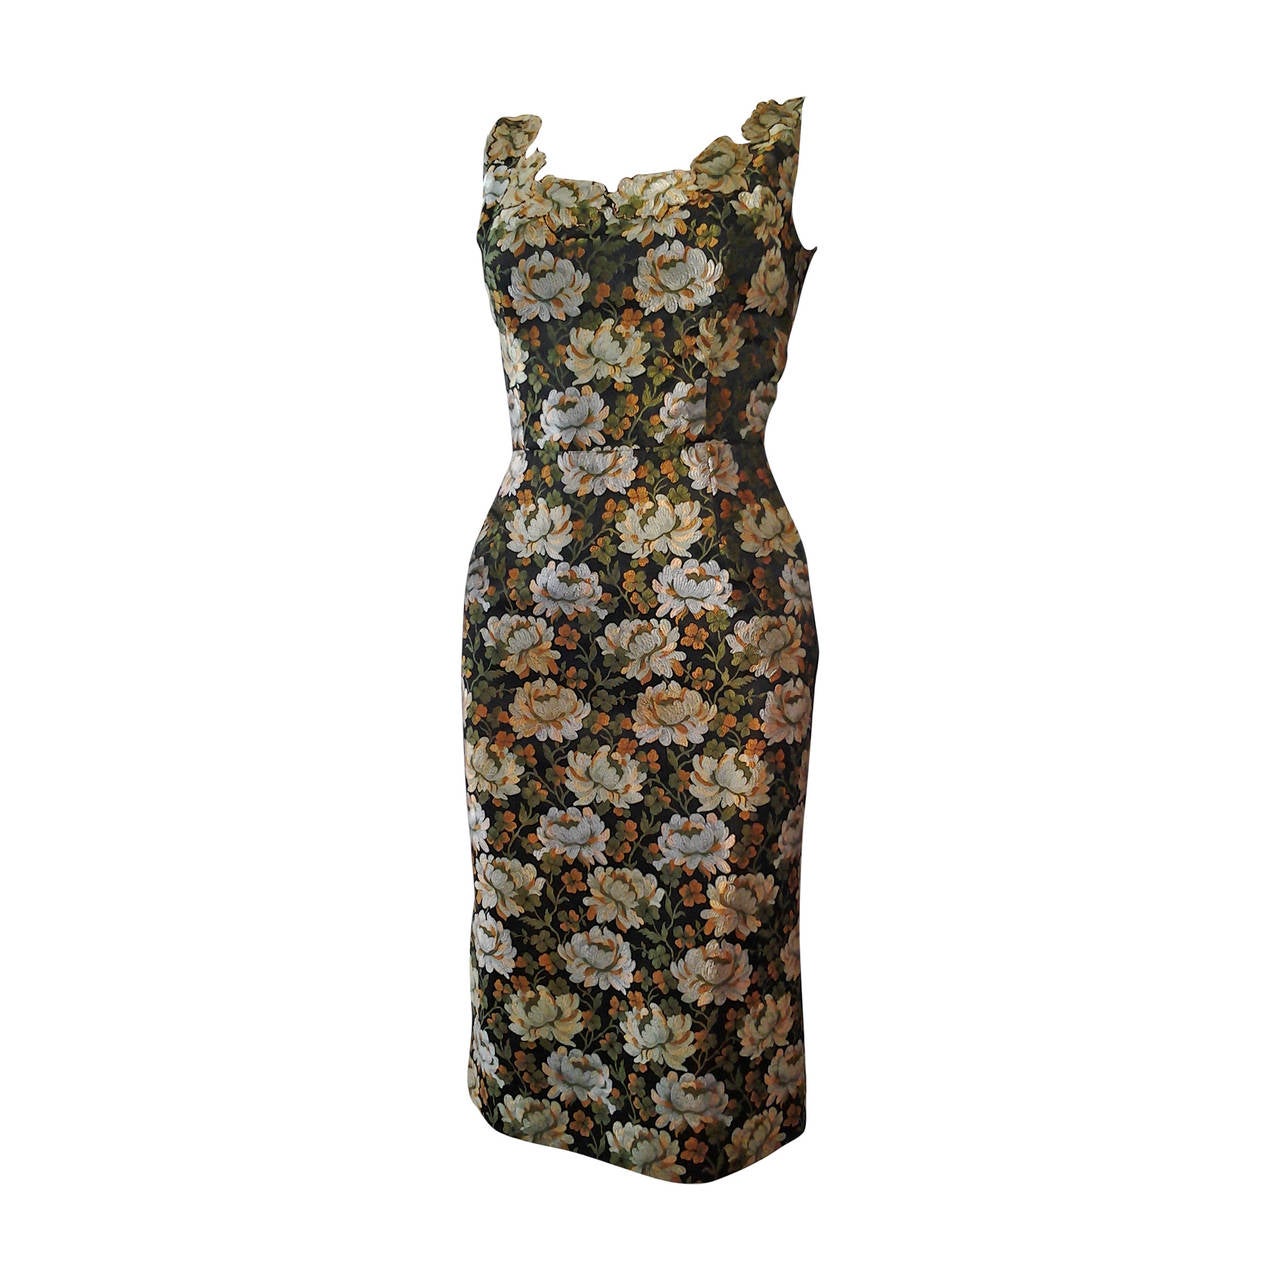 1950s Floral Brocade Sheath Dress w/ Applique Neckline and Overskirt